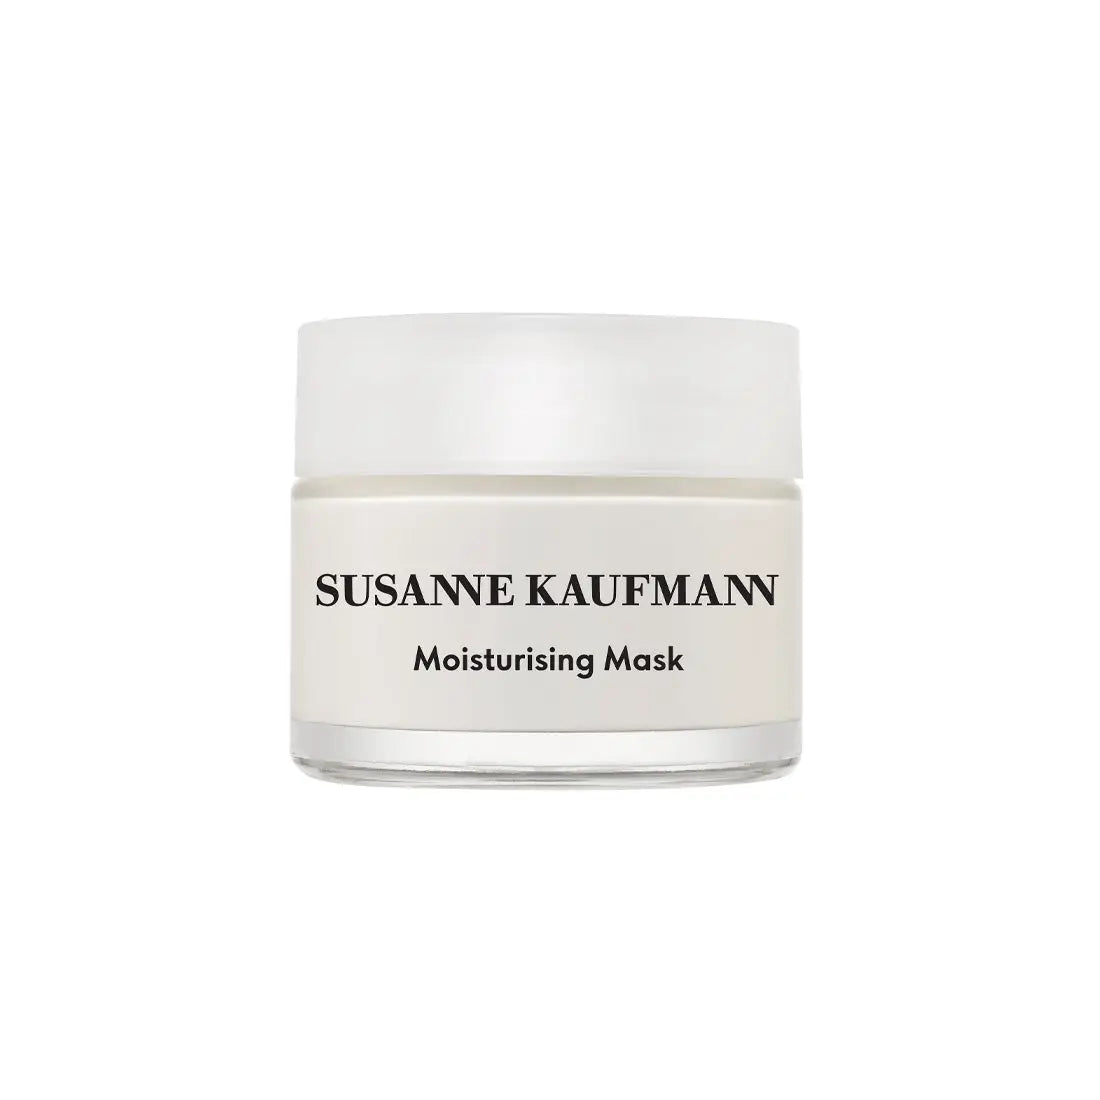 Susanne Kaufmann Moisturising Mask 50ml